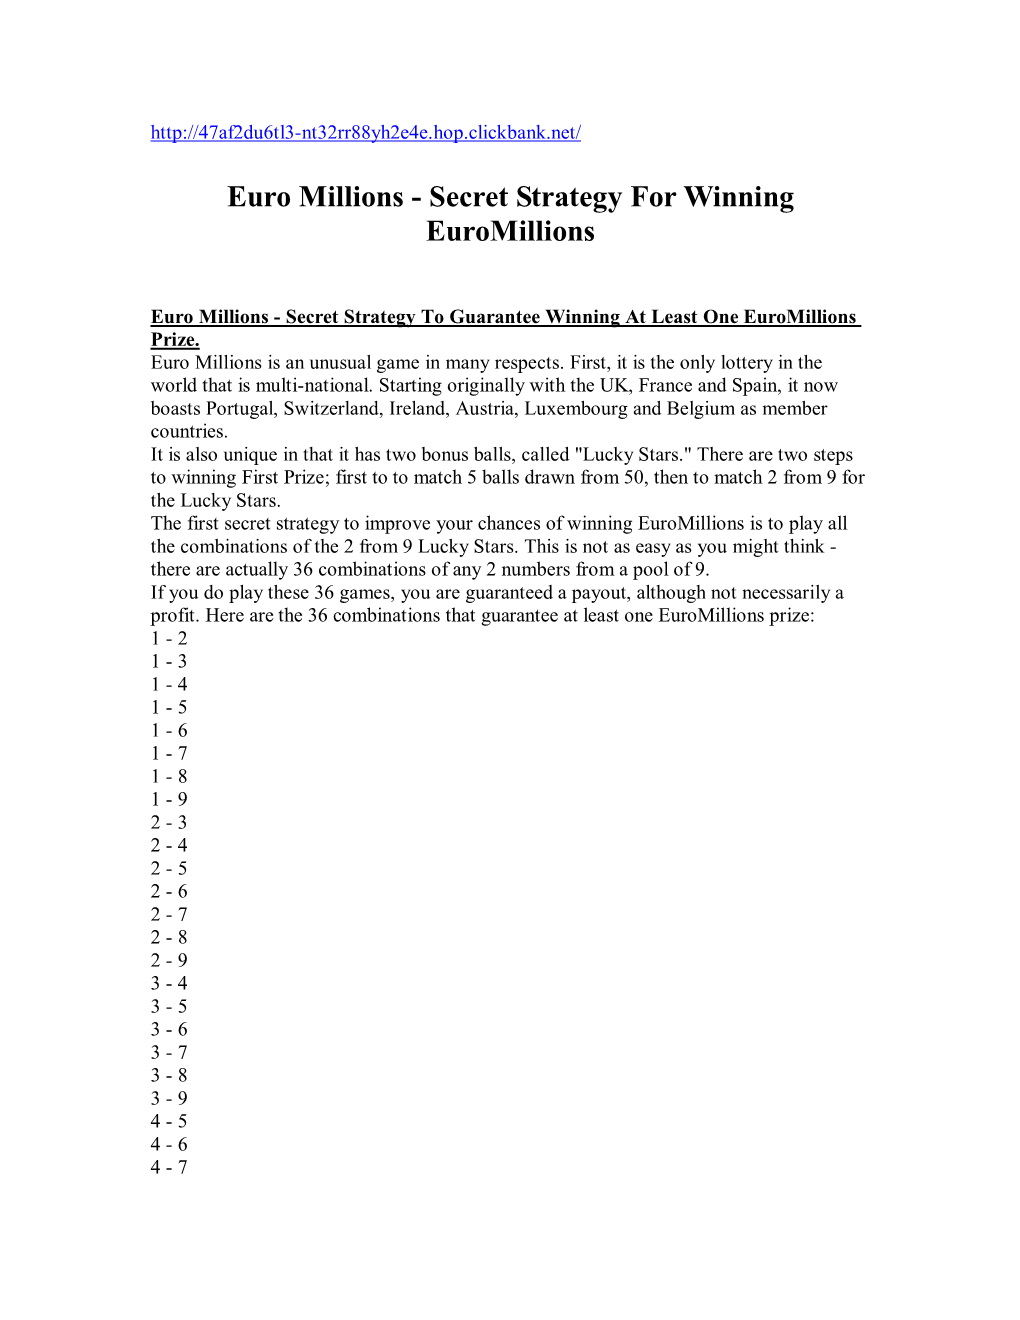 Euro Millions - Secret Strategy for Winning Euromillions